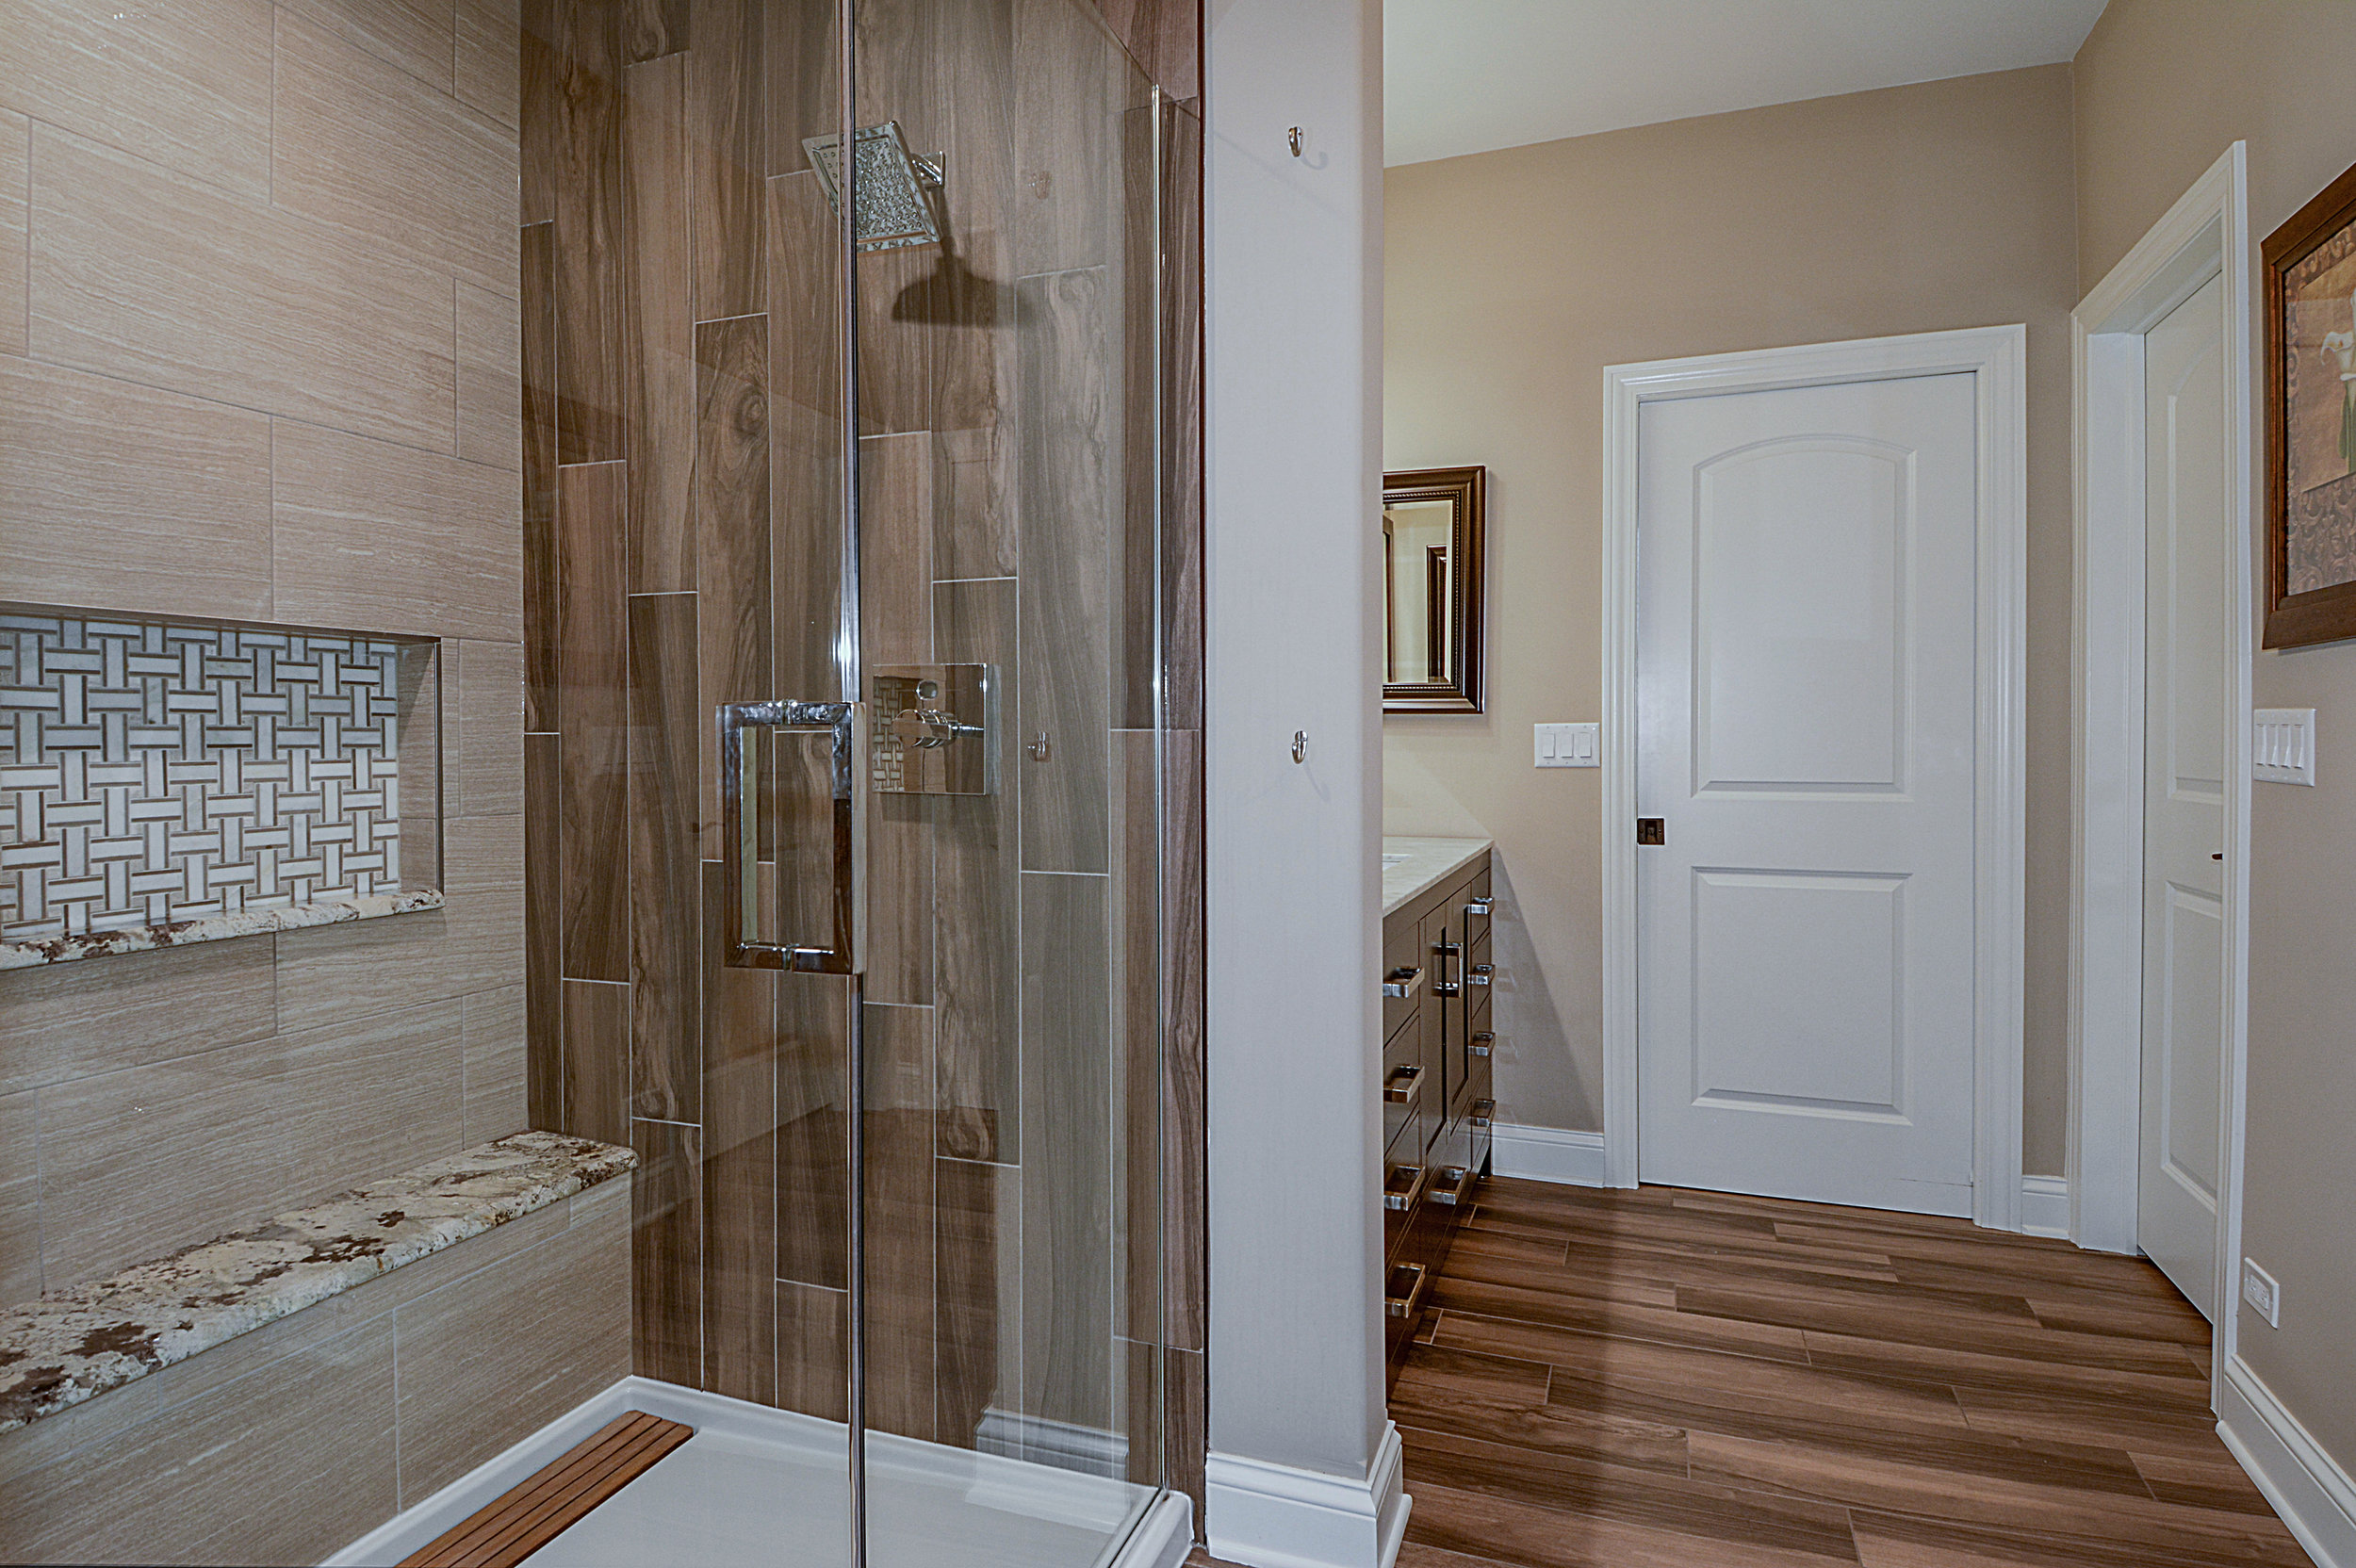 Bathroom Remodel in Geneva IL with Hardwood Tile in Shower